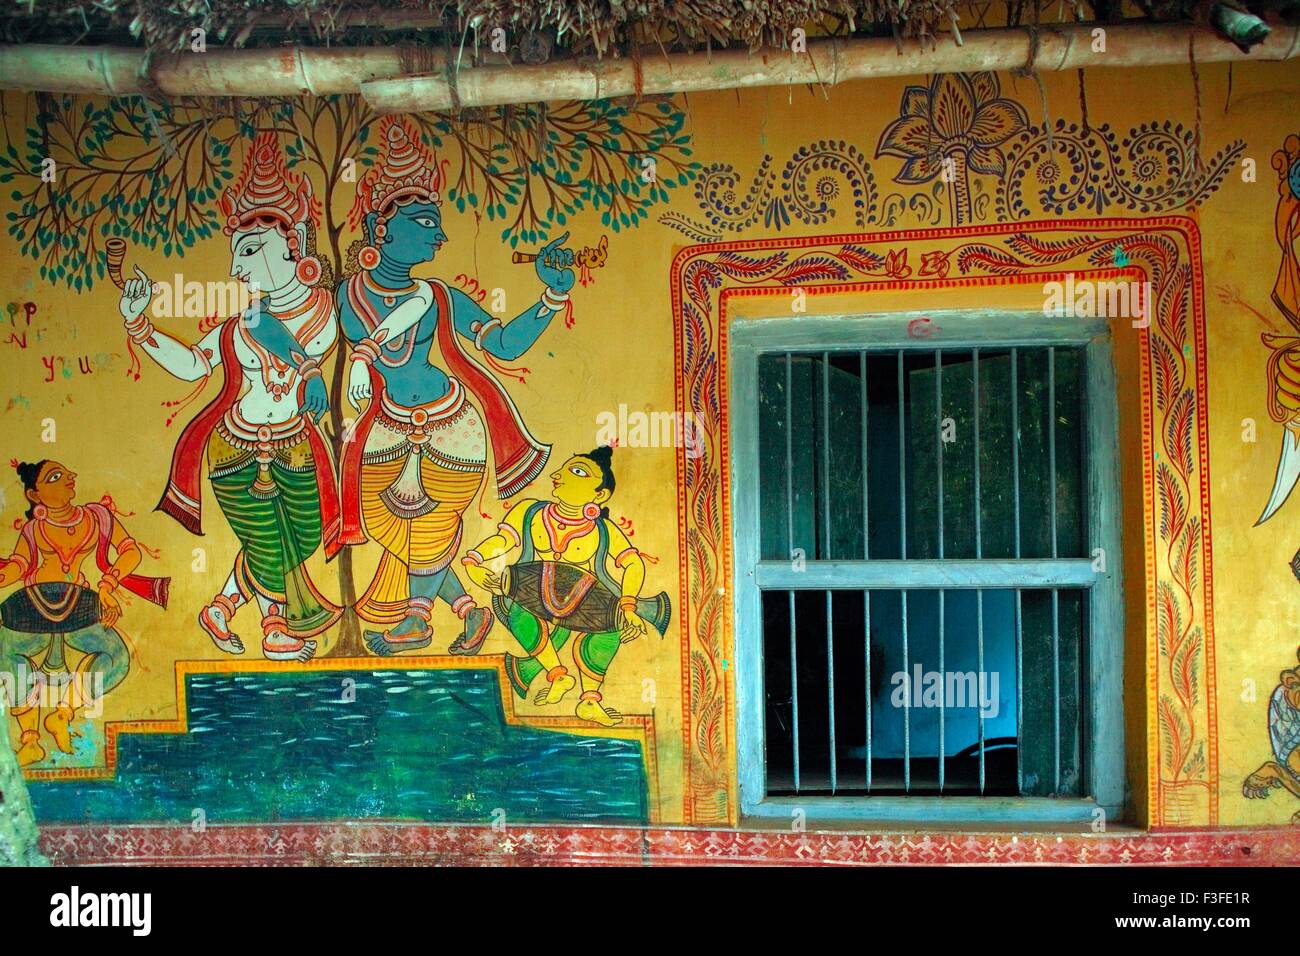 Muro pittura Radha Krishna Raghurajpur arte e villaggio artigianale vicino Puri Orissa Odisha India Foto Stock